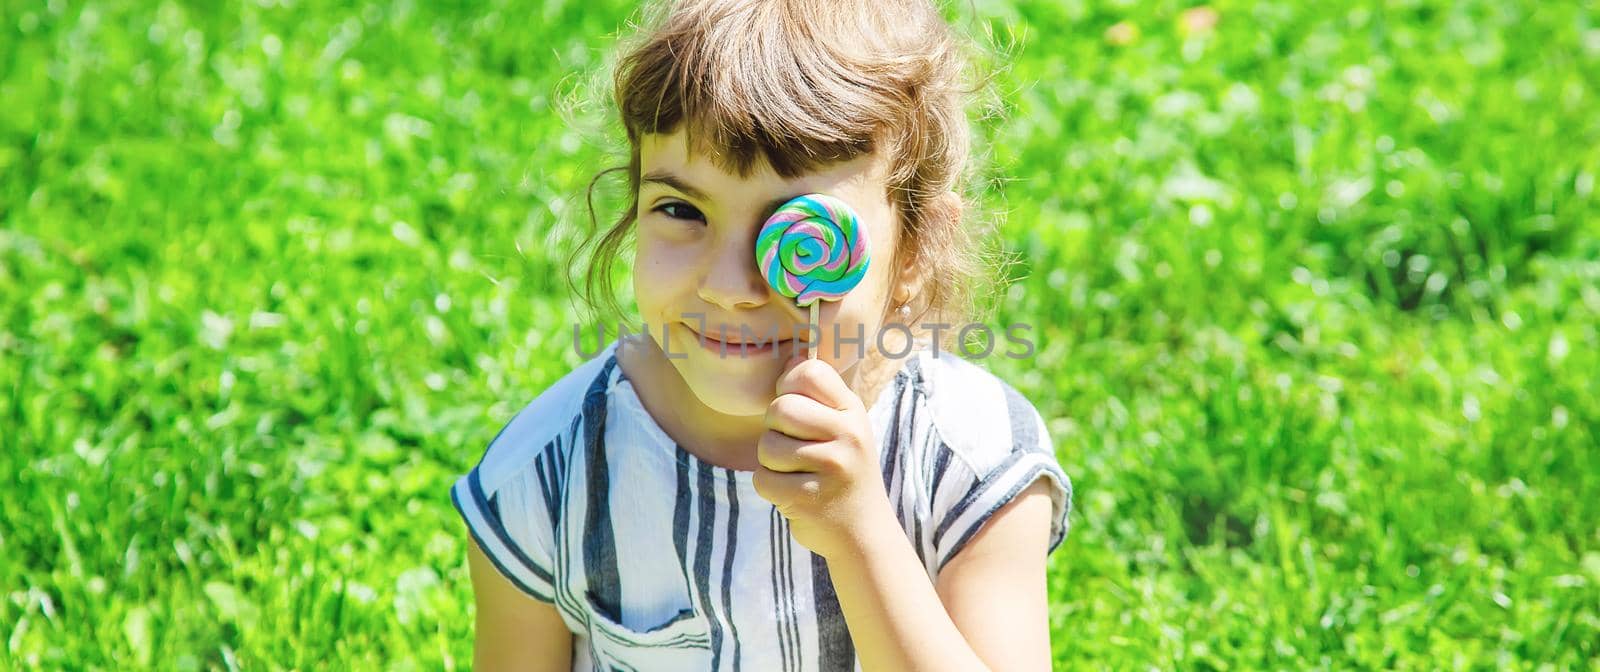 child eats lollipop on nature. Selective focus. by yanadjana